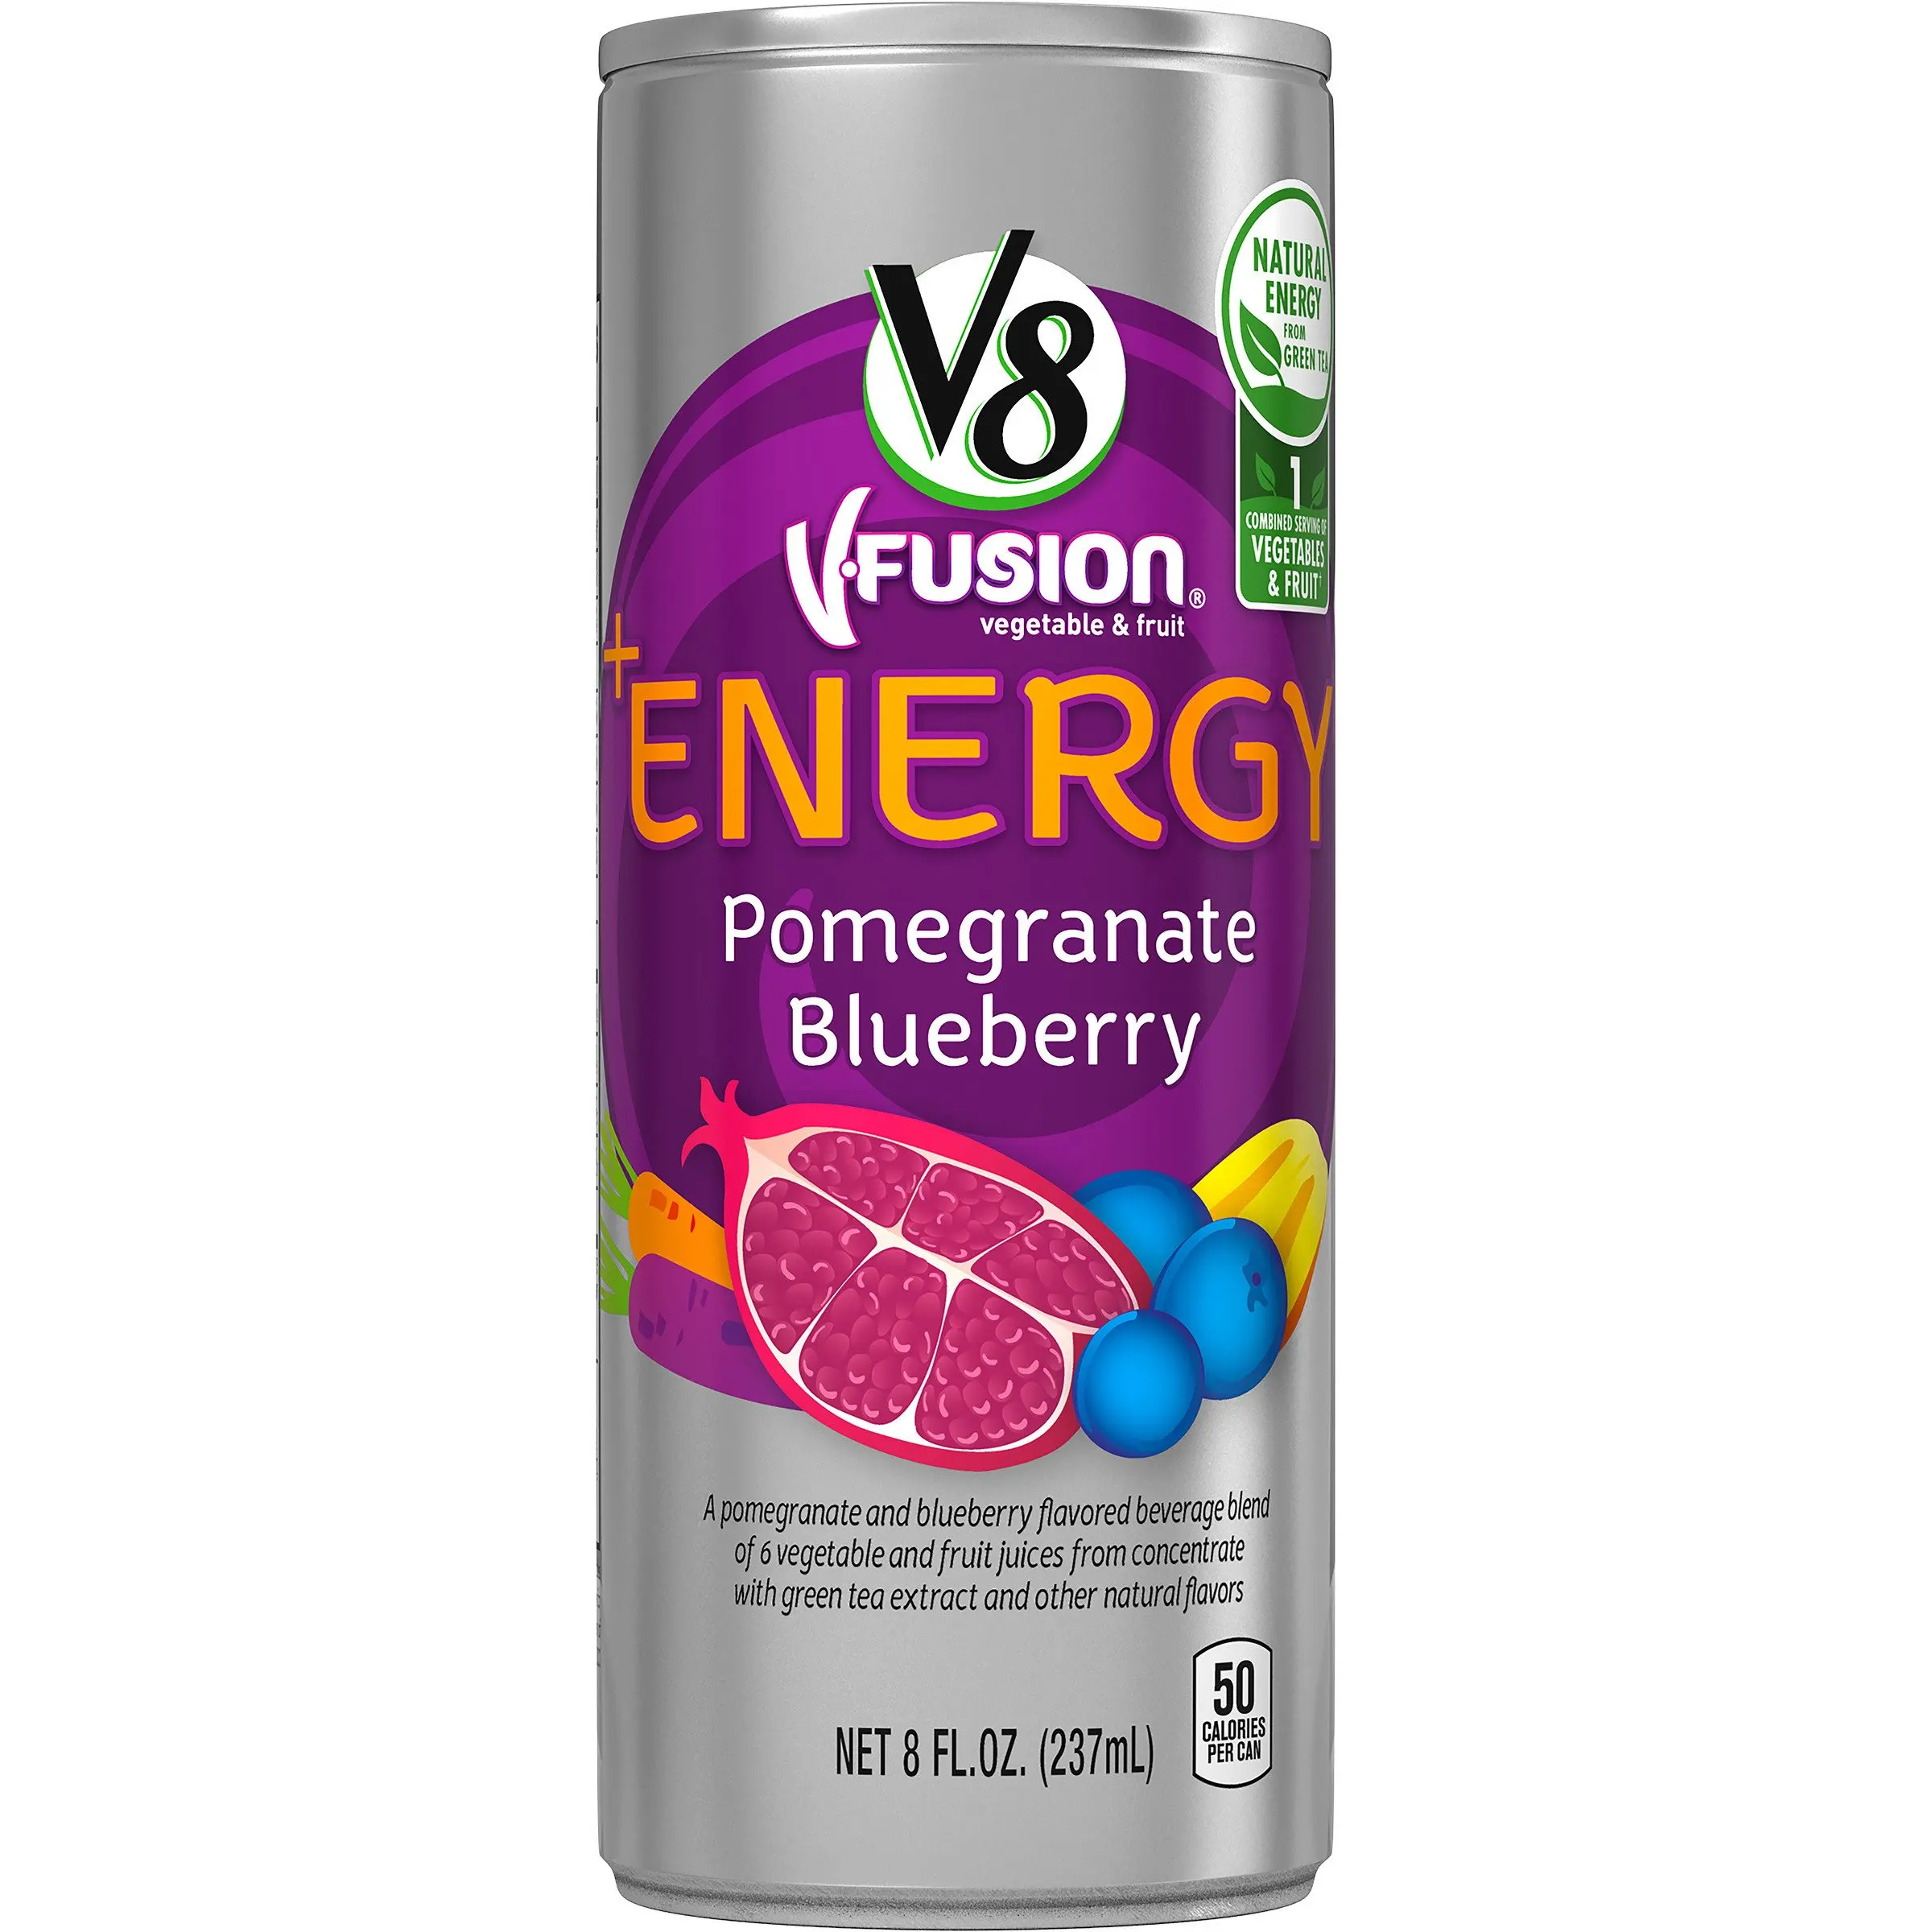 15.92. V8 +Energy, Pomegranate Blueberry, 8 Ounce (Pack of 24) (Packaging M...